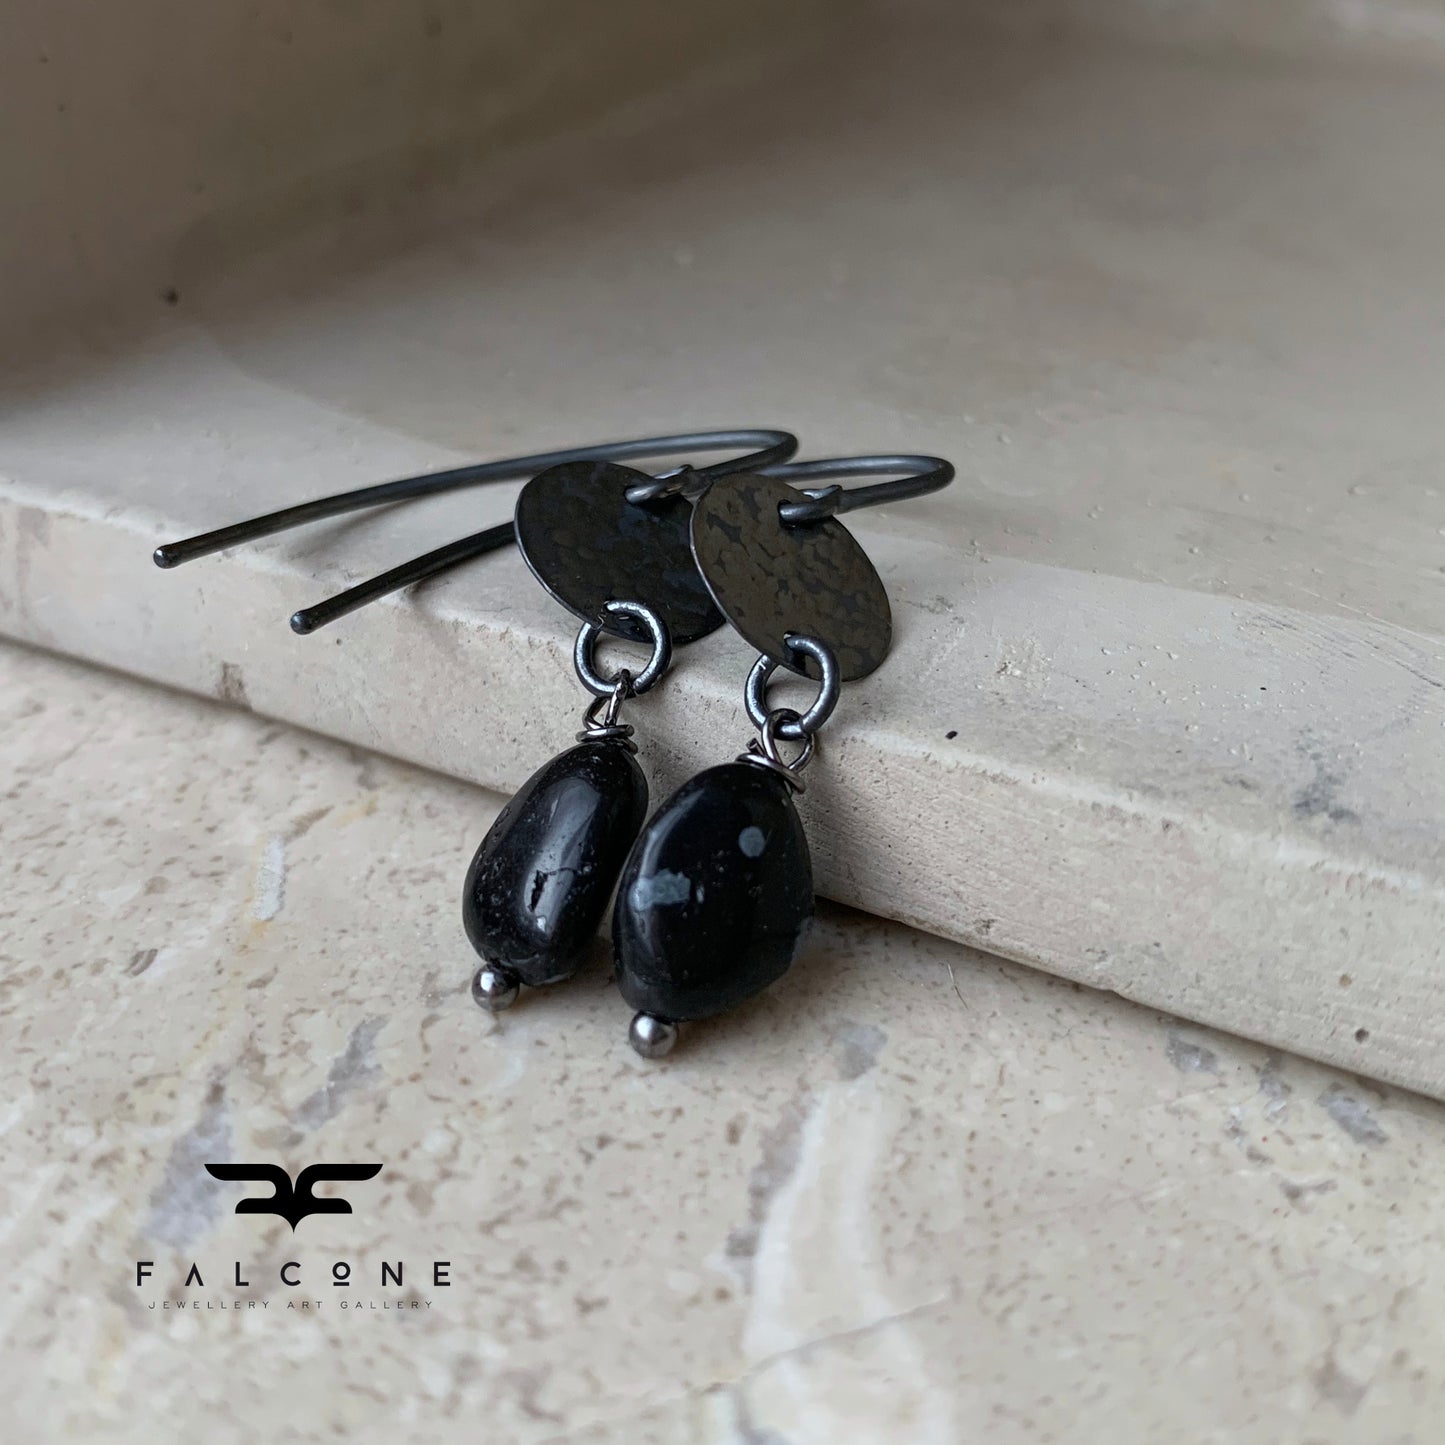 Silver earrings with obsidian nuggets 'Dalmatian in Negative'